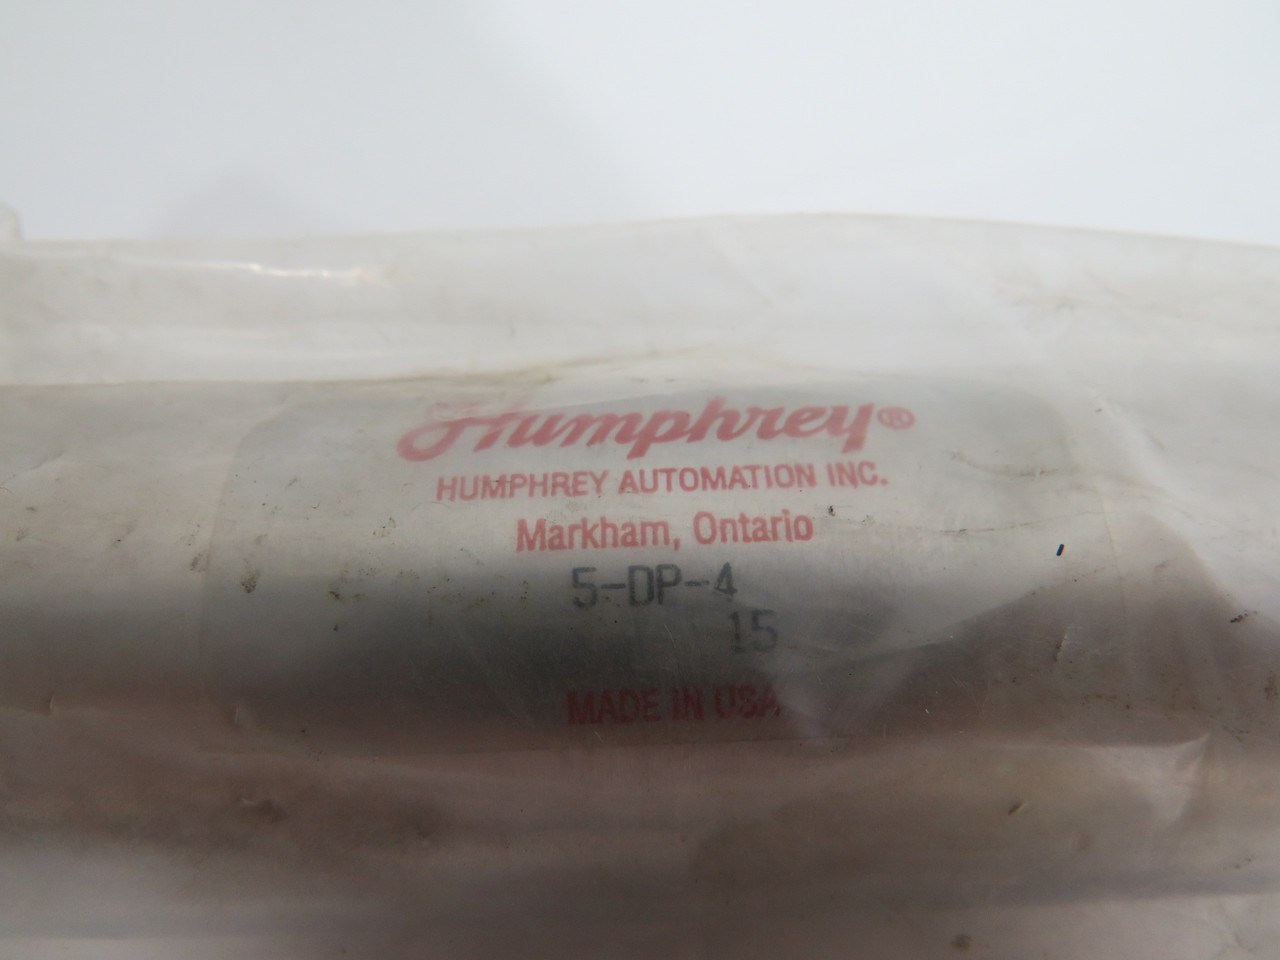 Humphrey 5-DP-4 Pneumatic Cylinder 1-1/2" Bore 4" Stroke NOP